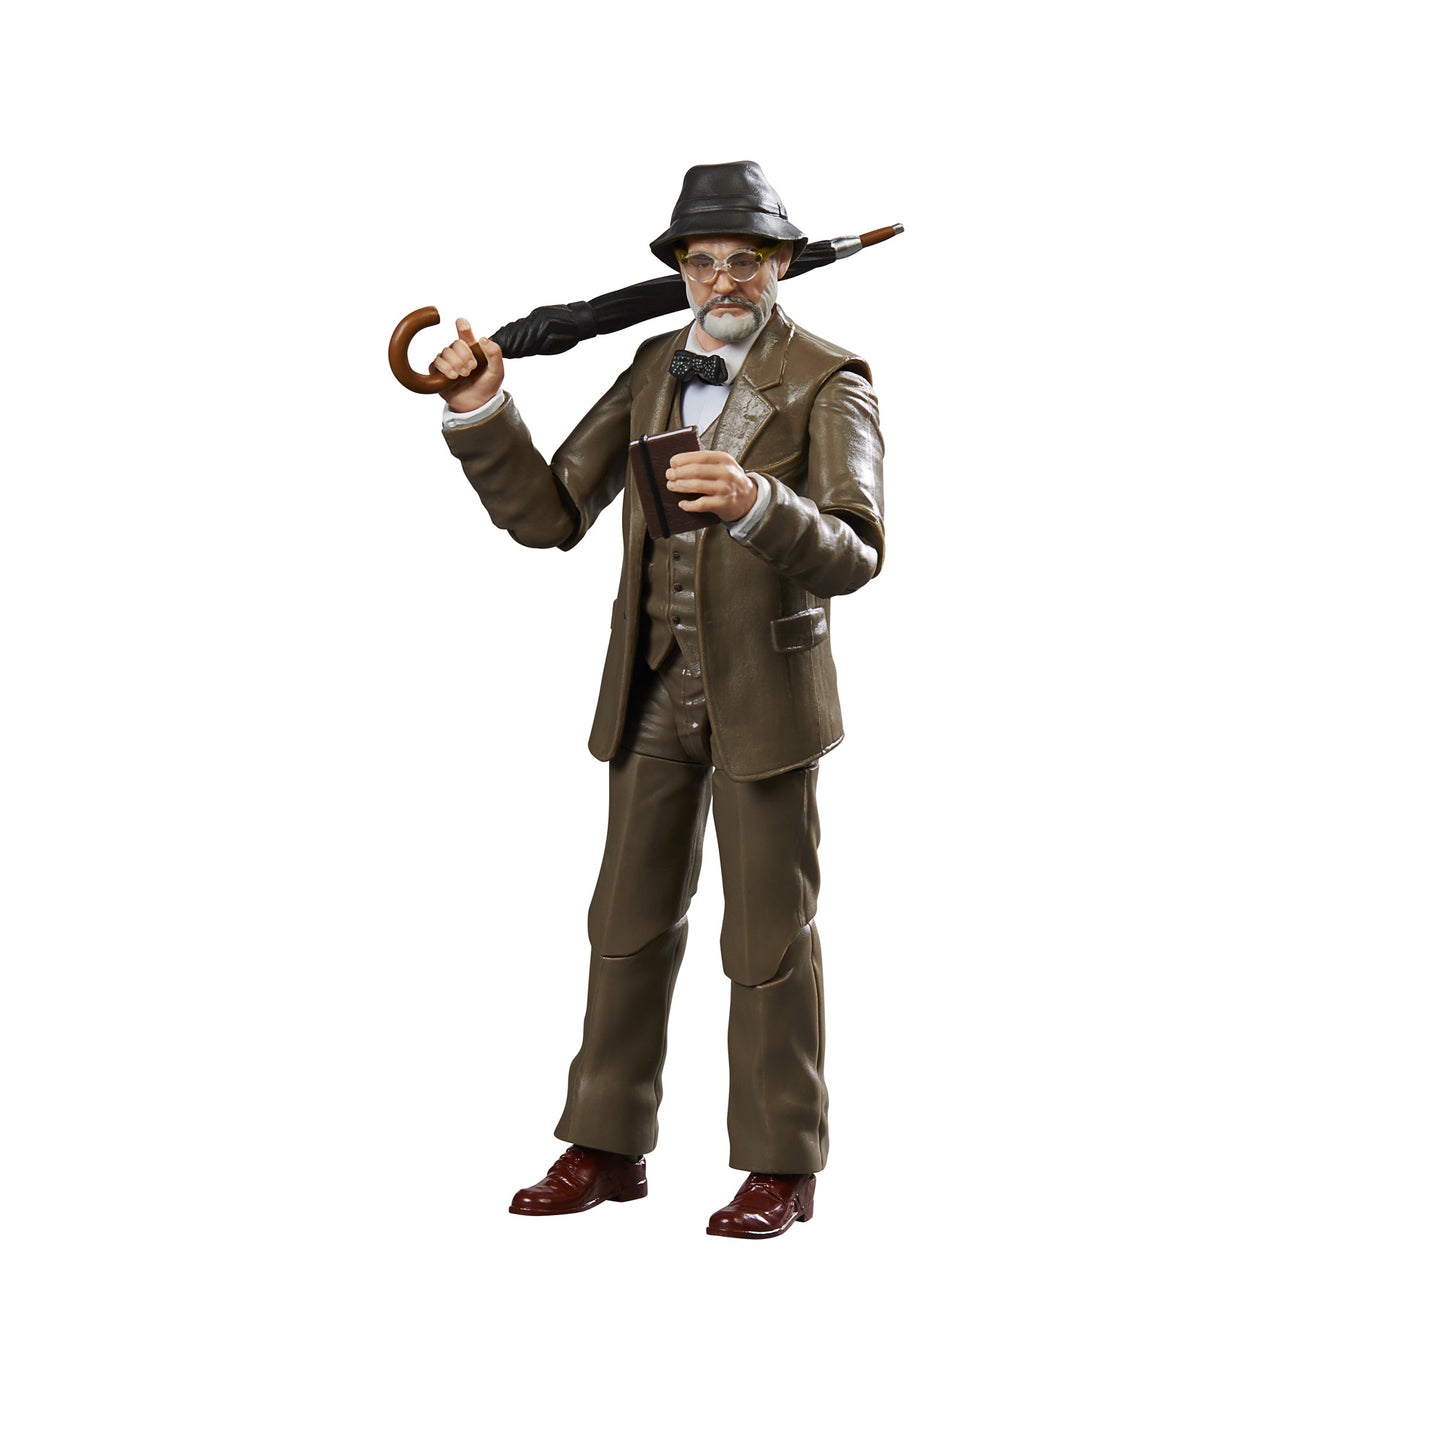 Indiana Jones Adventure Series Henry Jones, Sr. Action Figure Toy in pose - Heretoserveyou